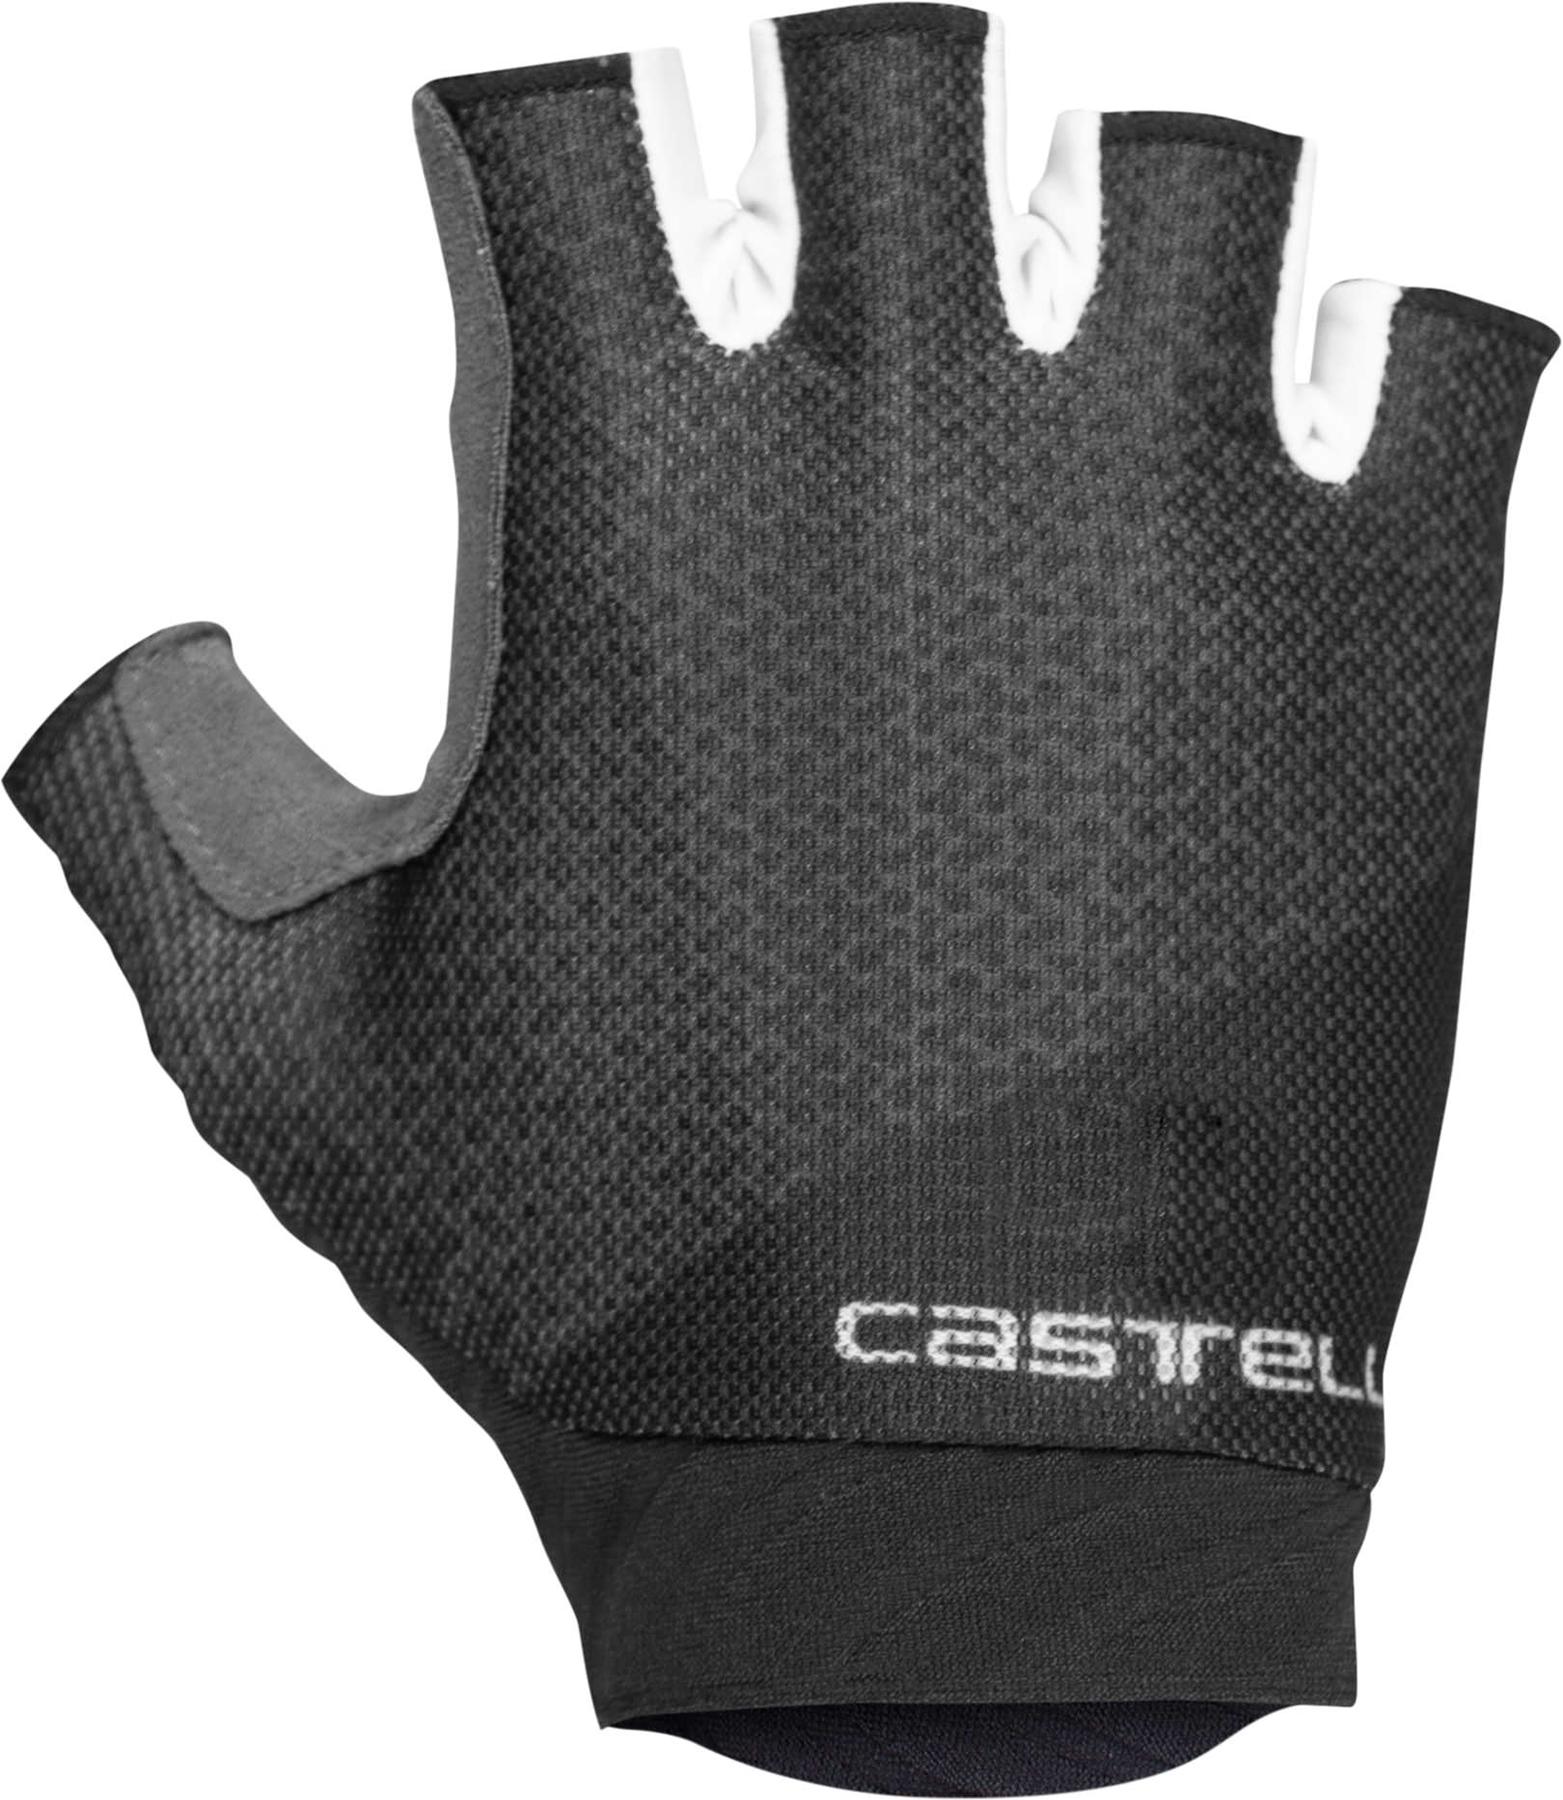 Castelli Womens Roubaix Gel 2 Cycling Gloves - Light Black